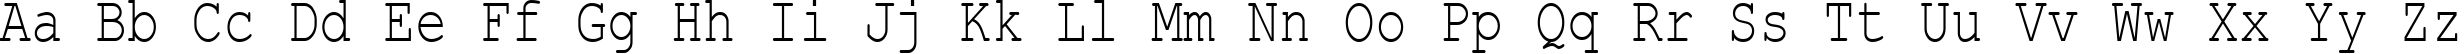 Пример написания английского алфавита шрифтом Courier New Cyr_80n